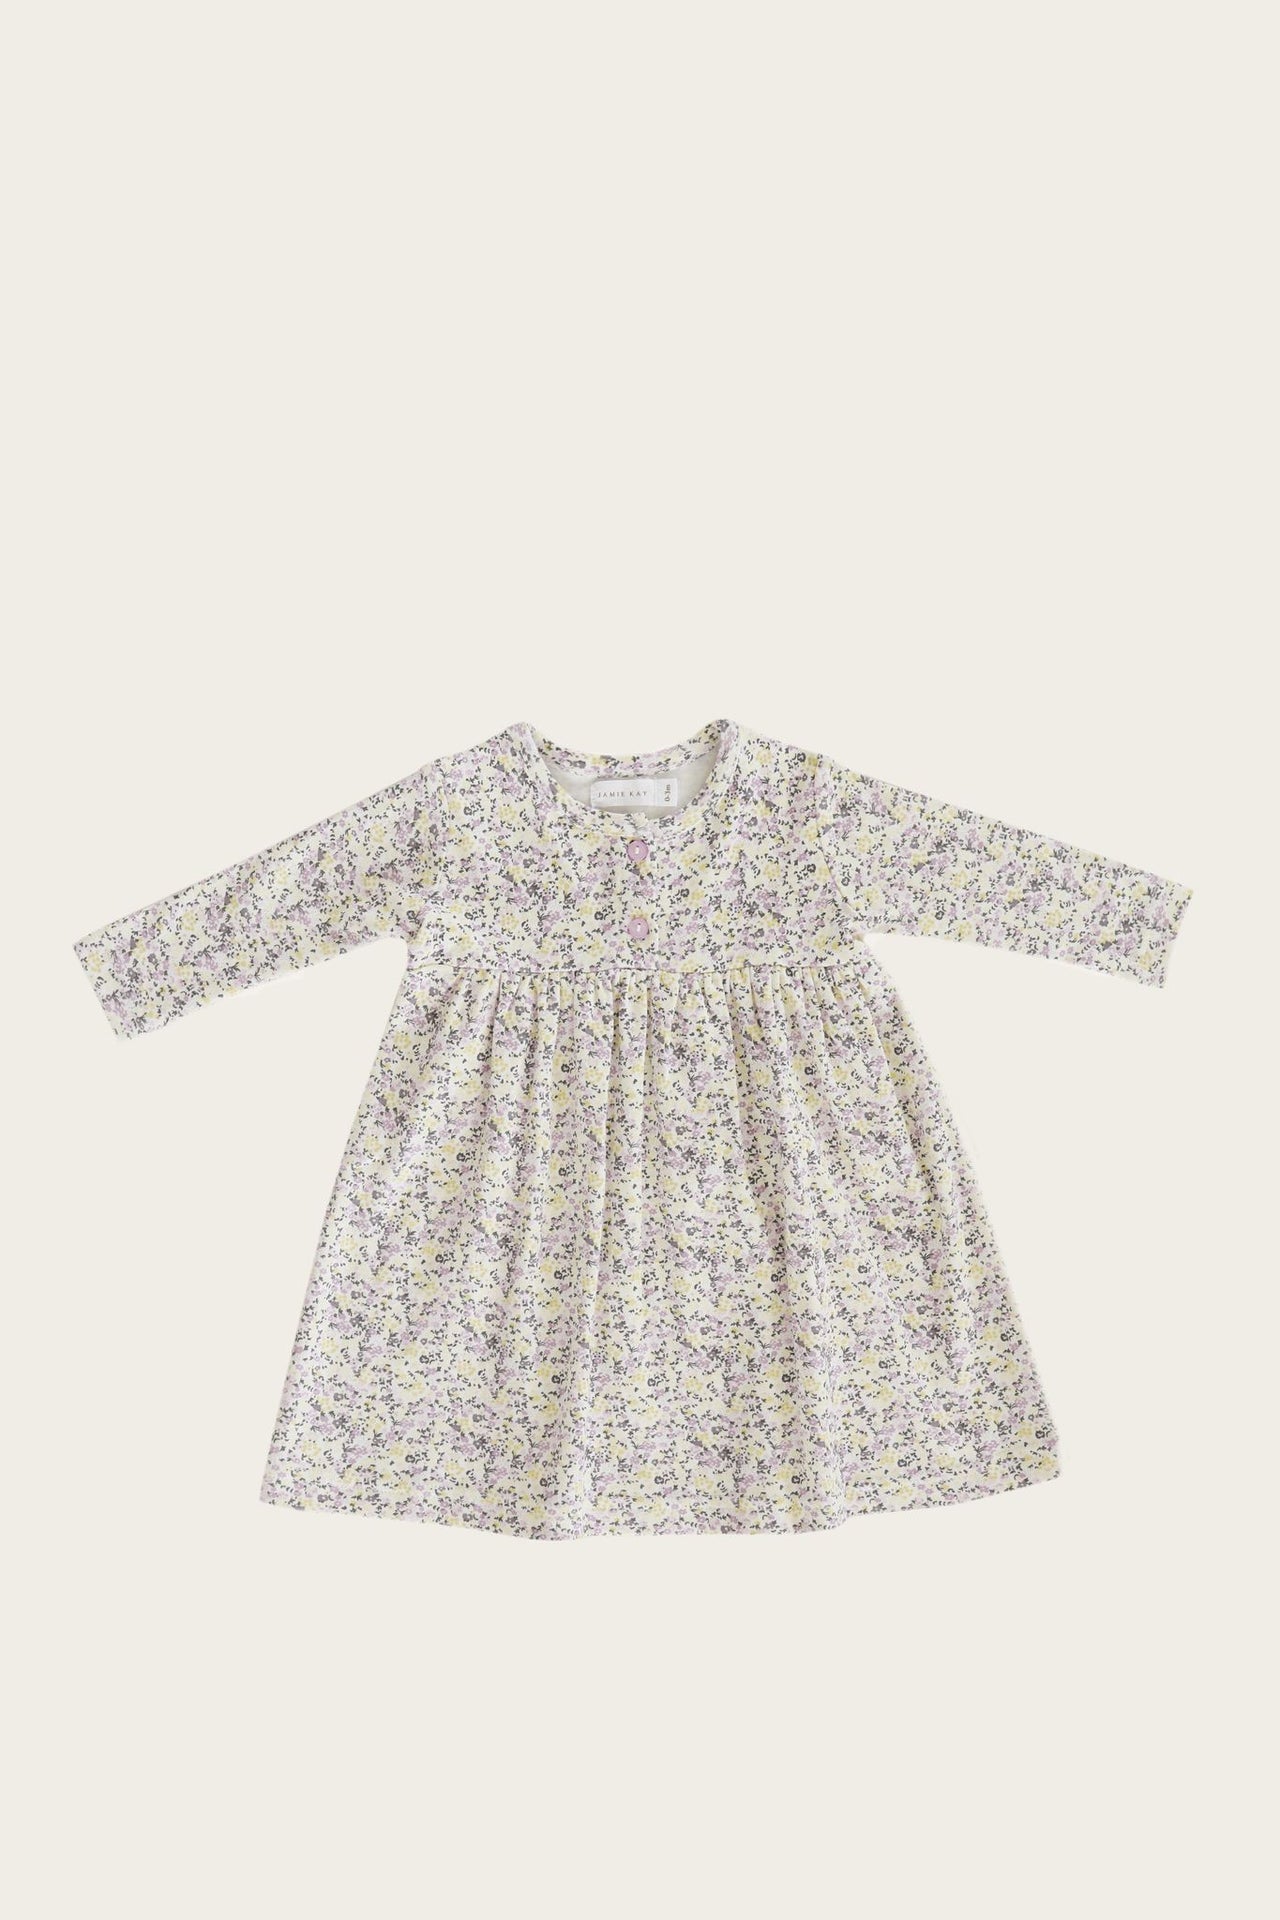 Jamie Kay Organic Cotton Dress, Summer Floral